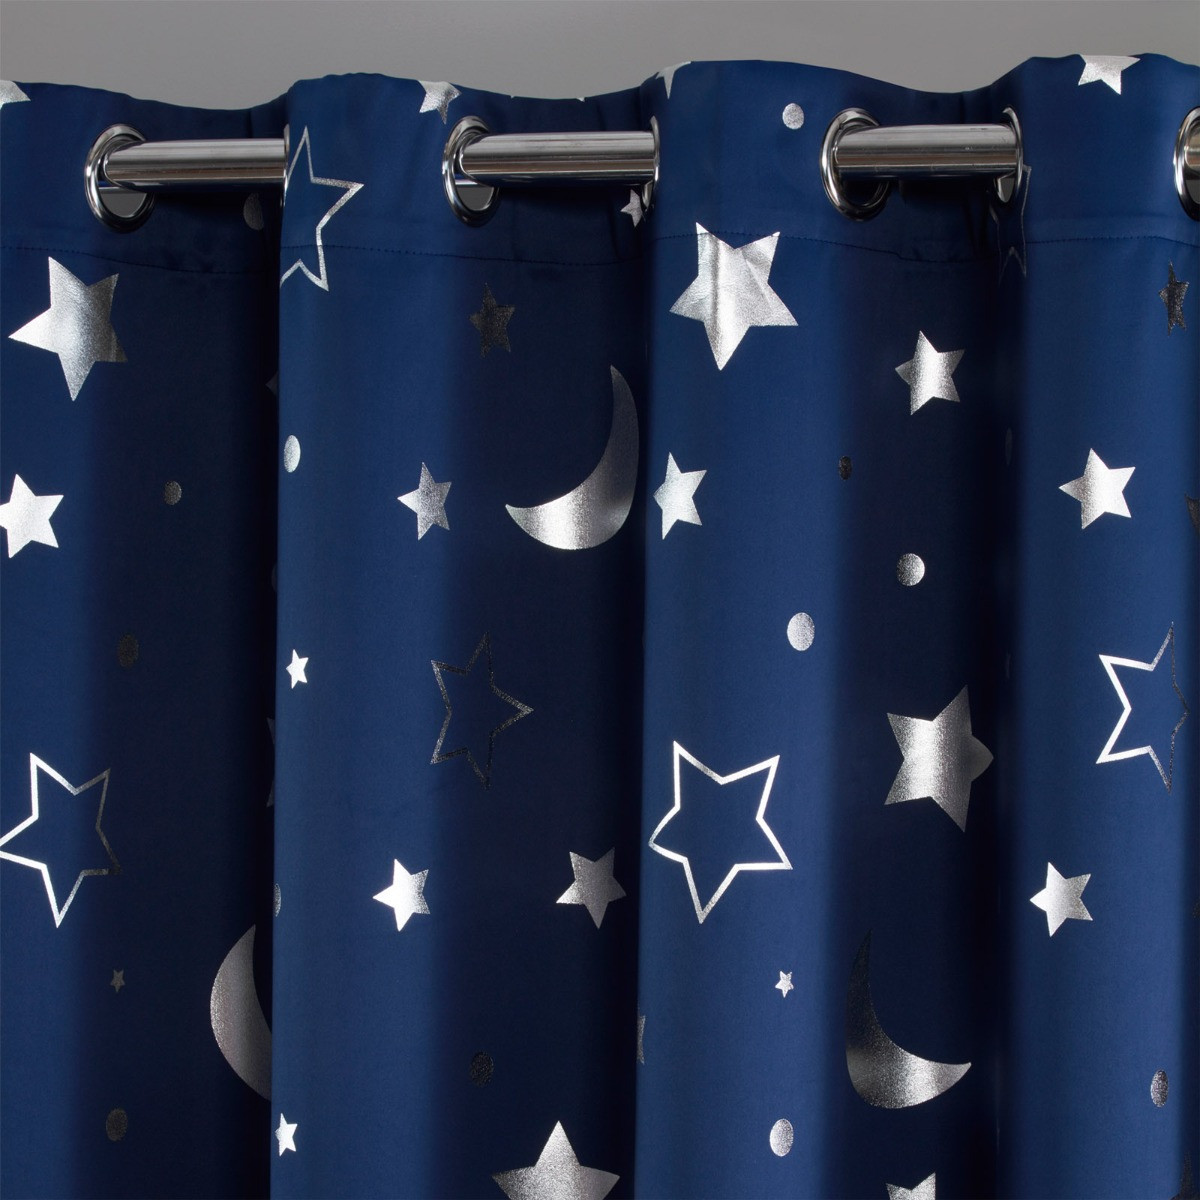 Dreamscene Star Blackout Galaxy Kids Curtains - Navy Blue>